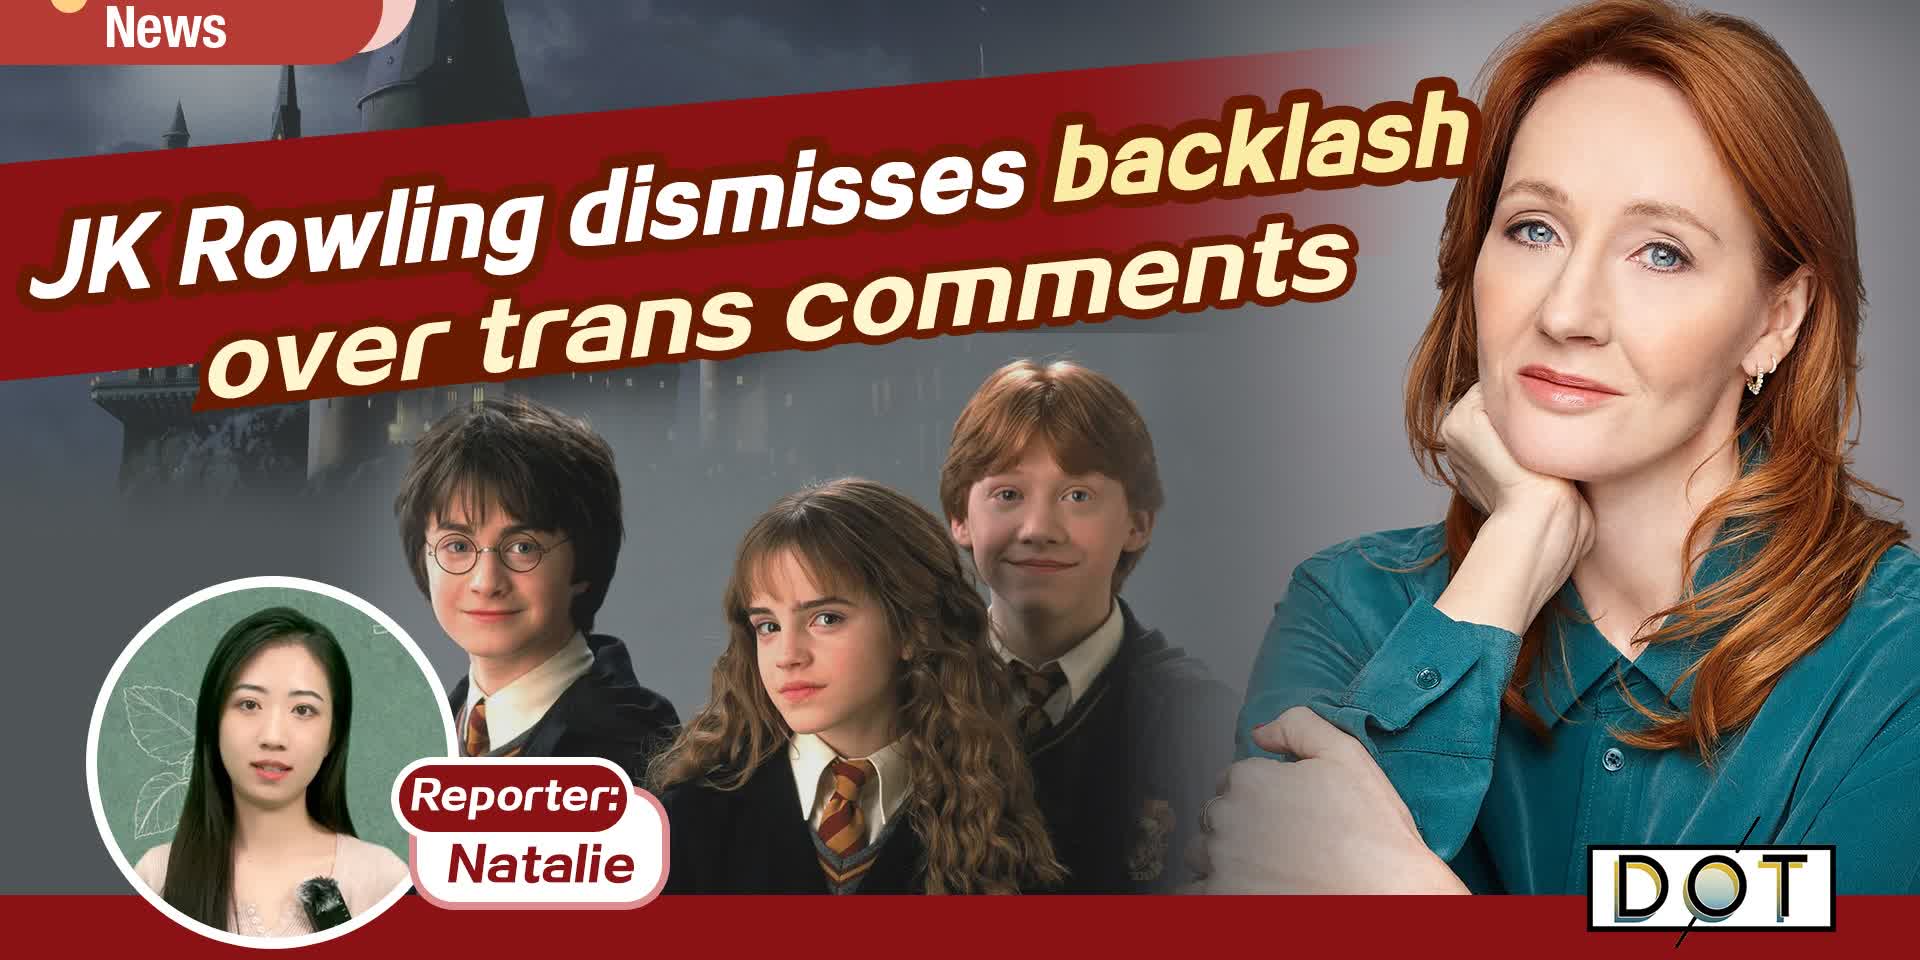 1-minute News | JK Rowling dismisses backlash over trans comments